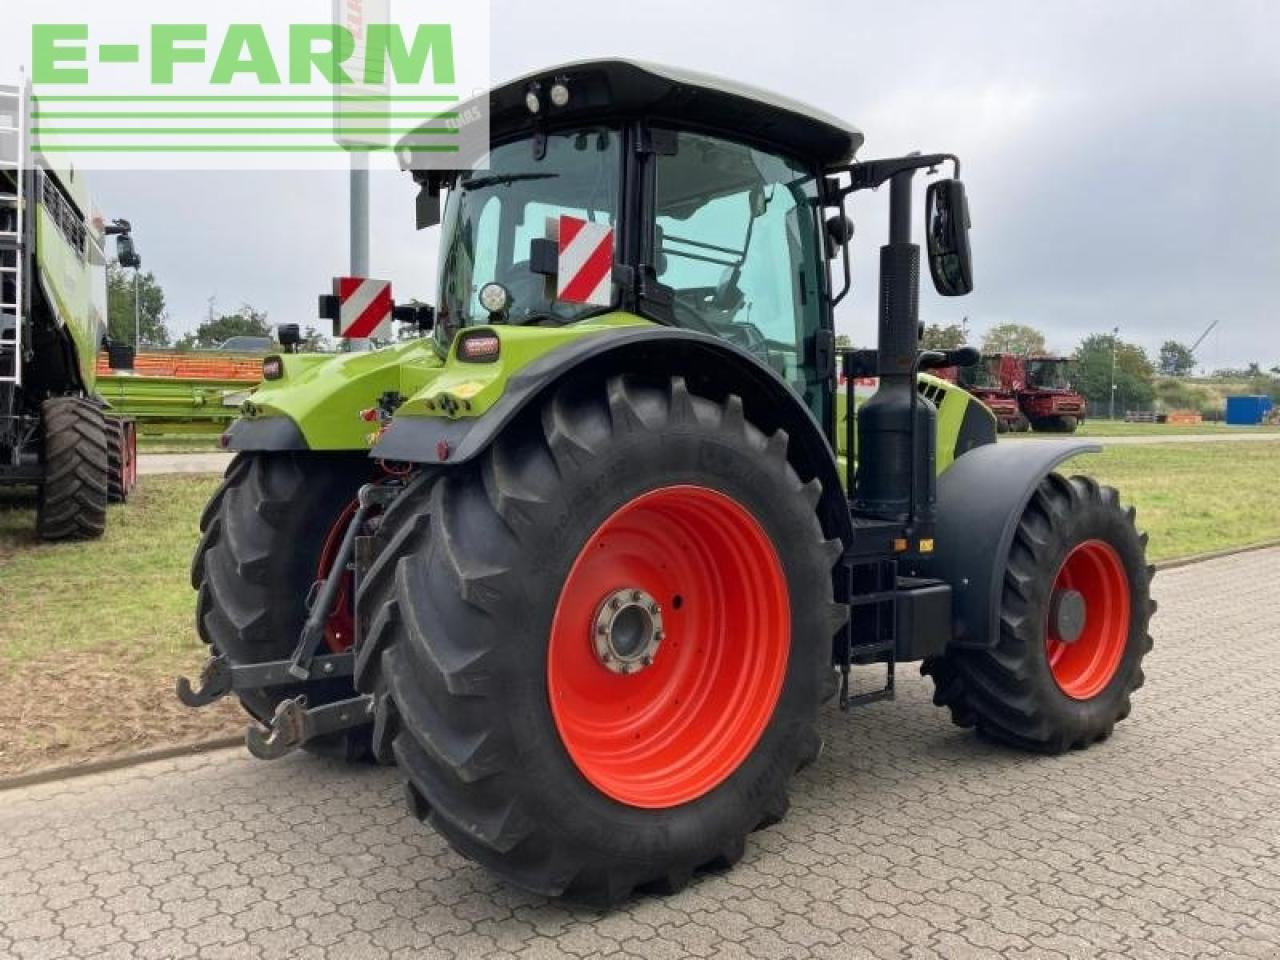 Farm tractor CLAAS arion 660 cmatic